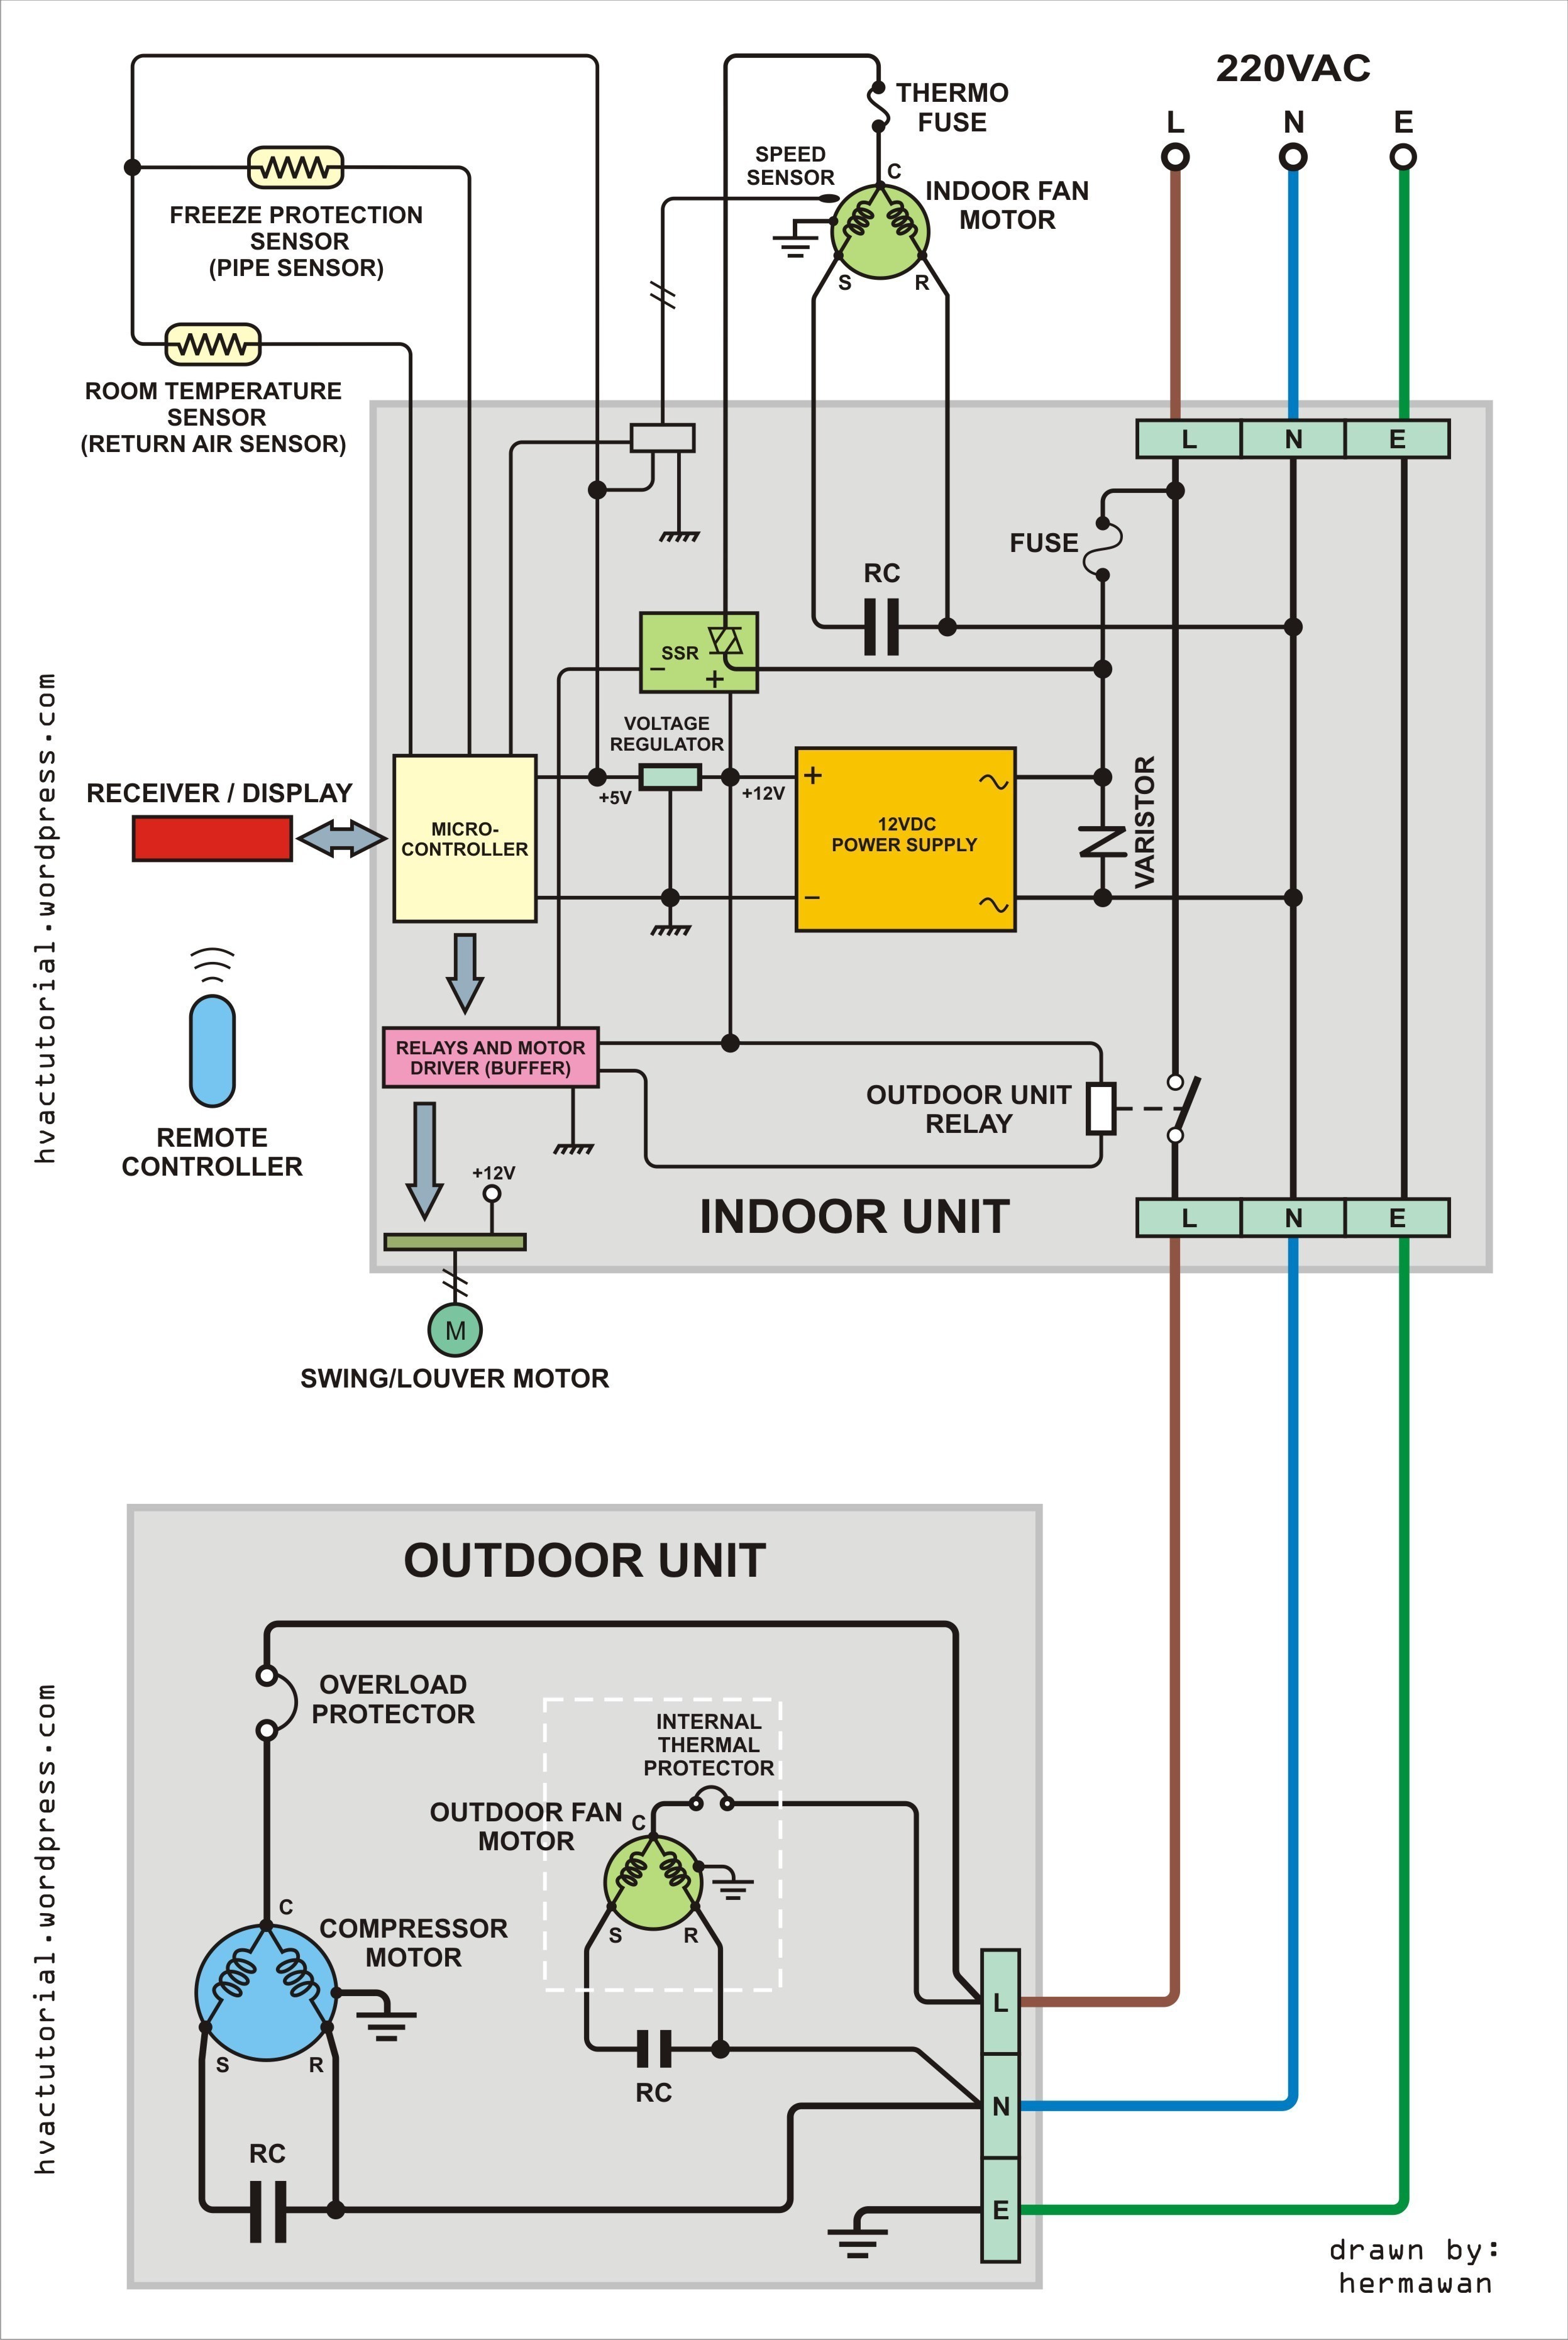 Car Ac System Diagram Awesome Car Air Conditioning System Wiring Diagram Contemporary Of Car Ac System Diagram